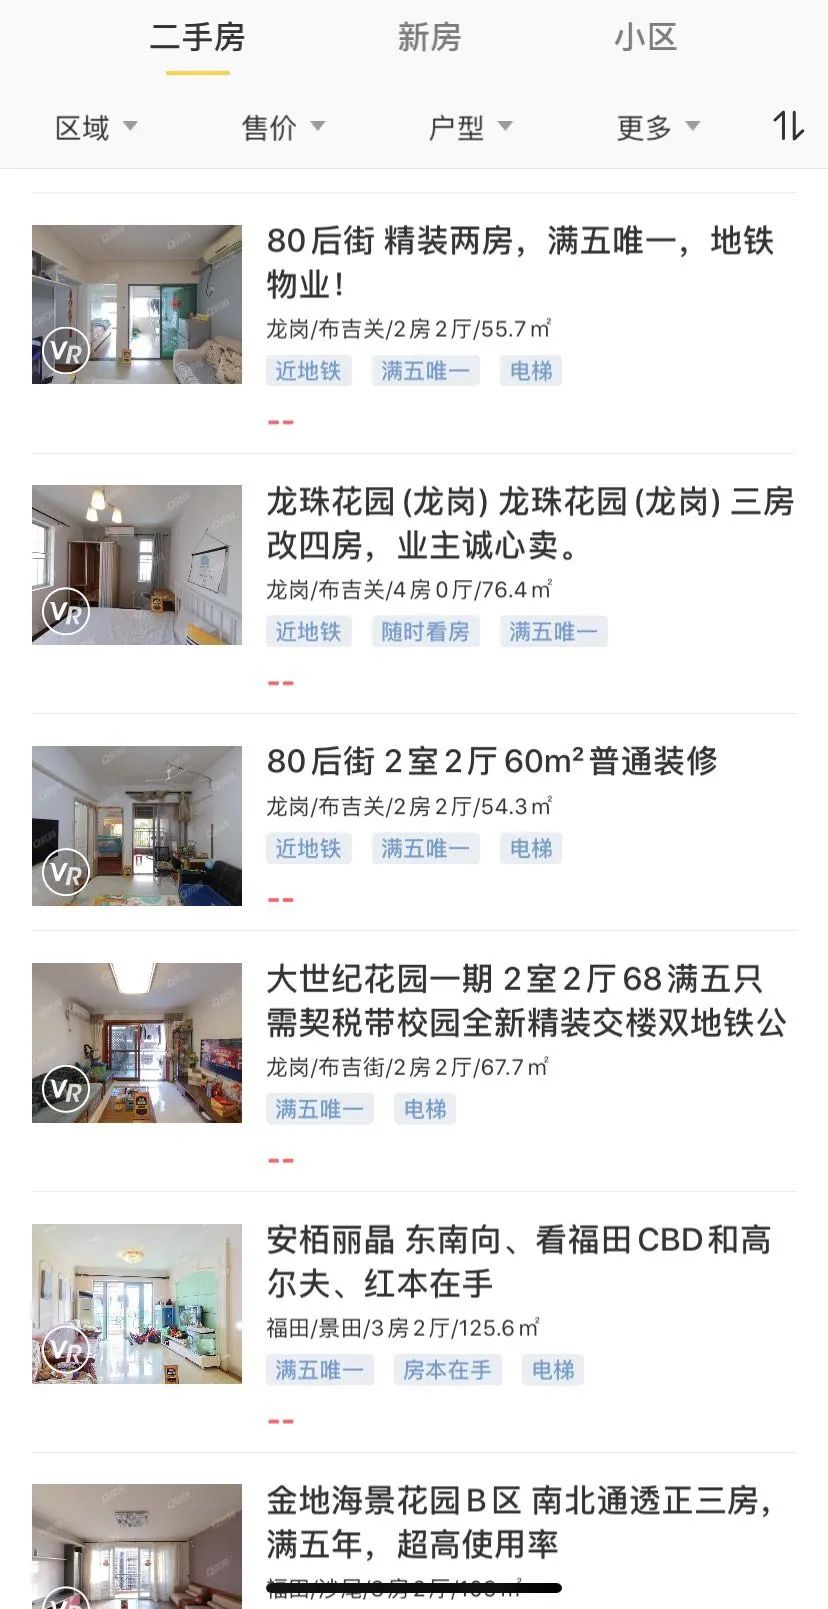 ▲Q房网APP上，深圳二手房房源不显示挂牌价。